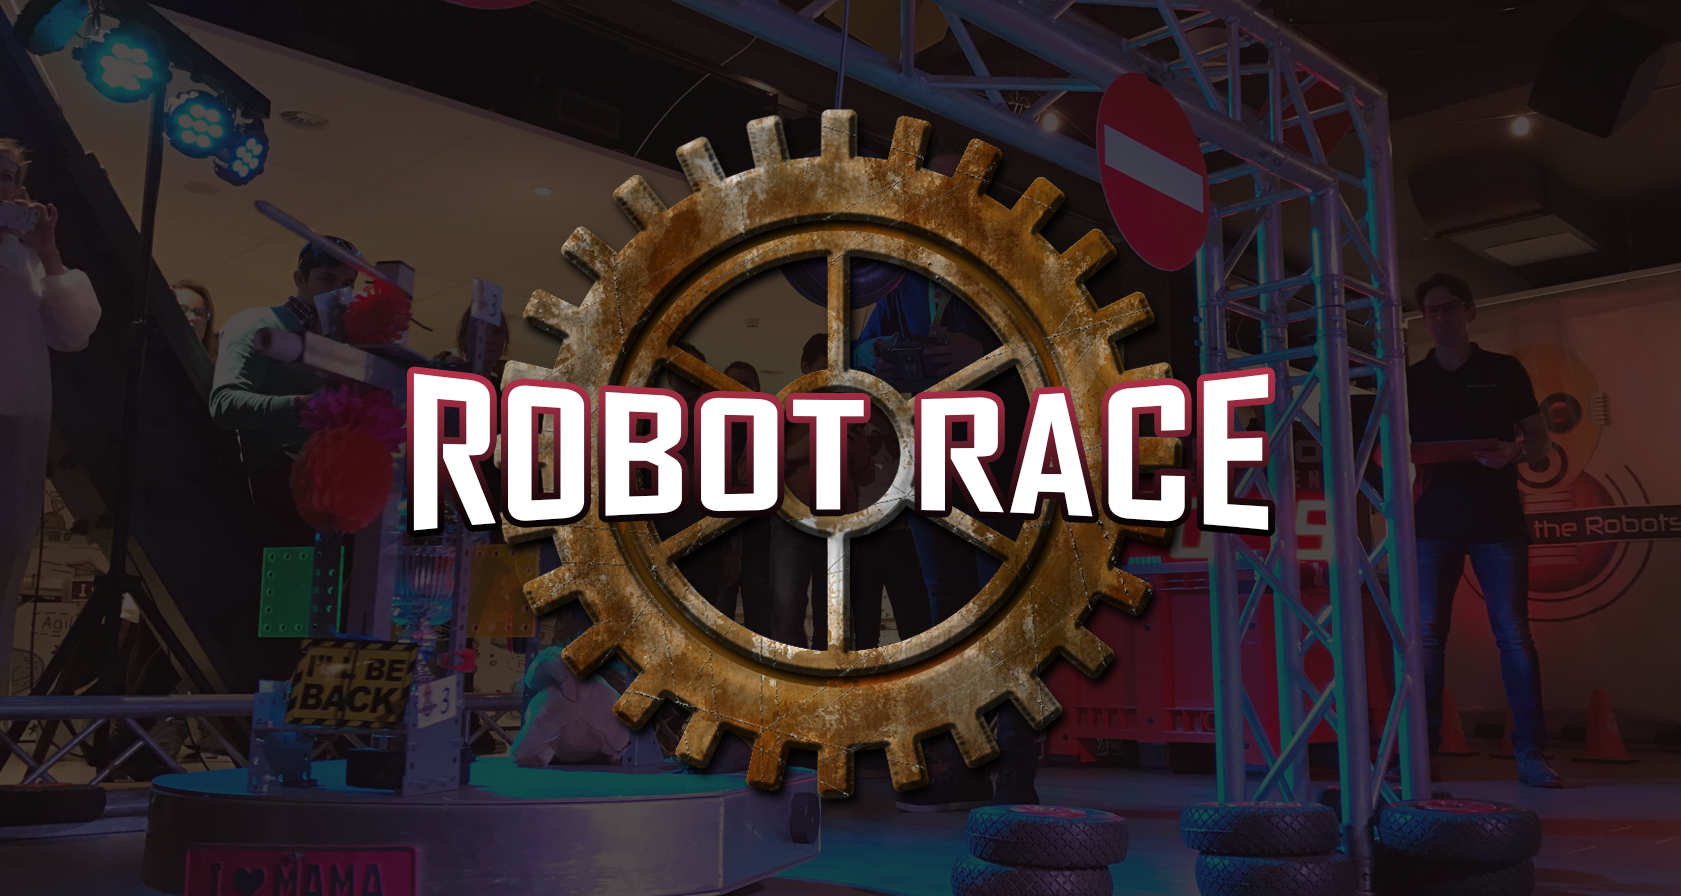 Teamuitje Emmen: Robot Race